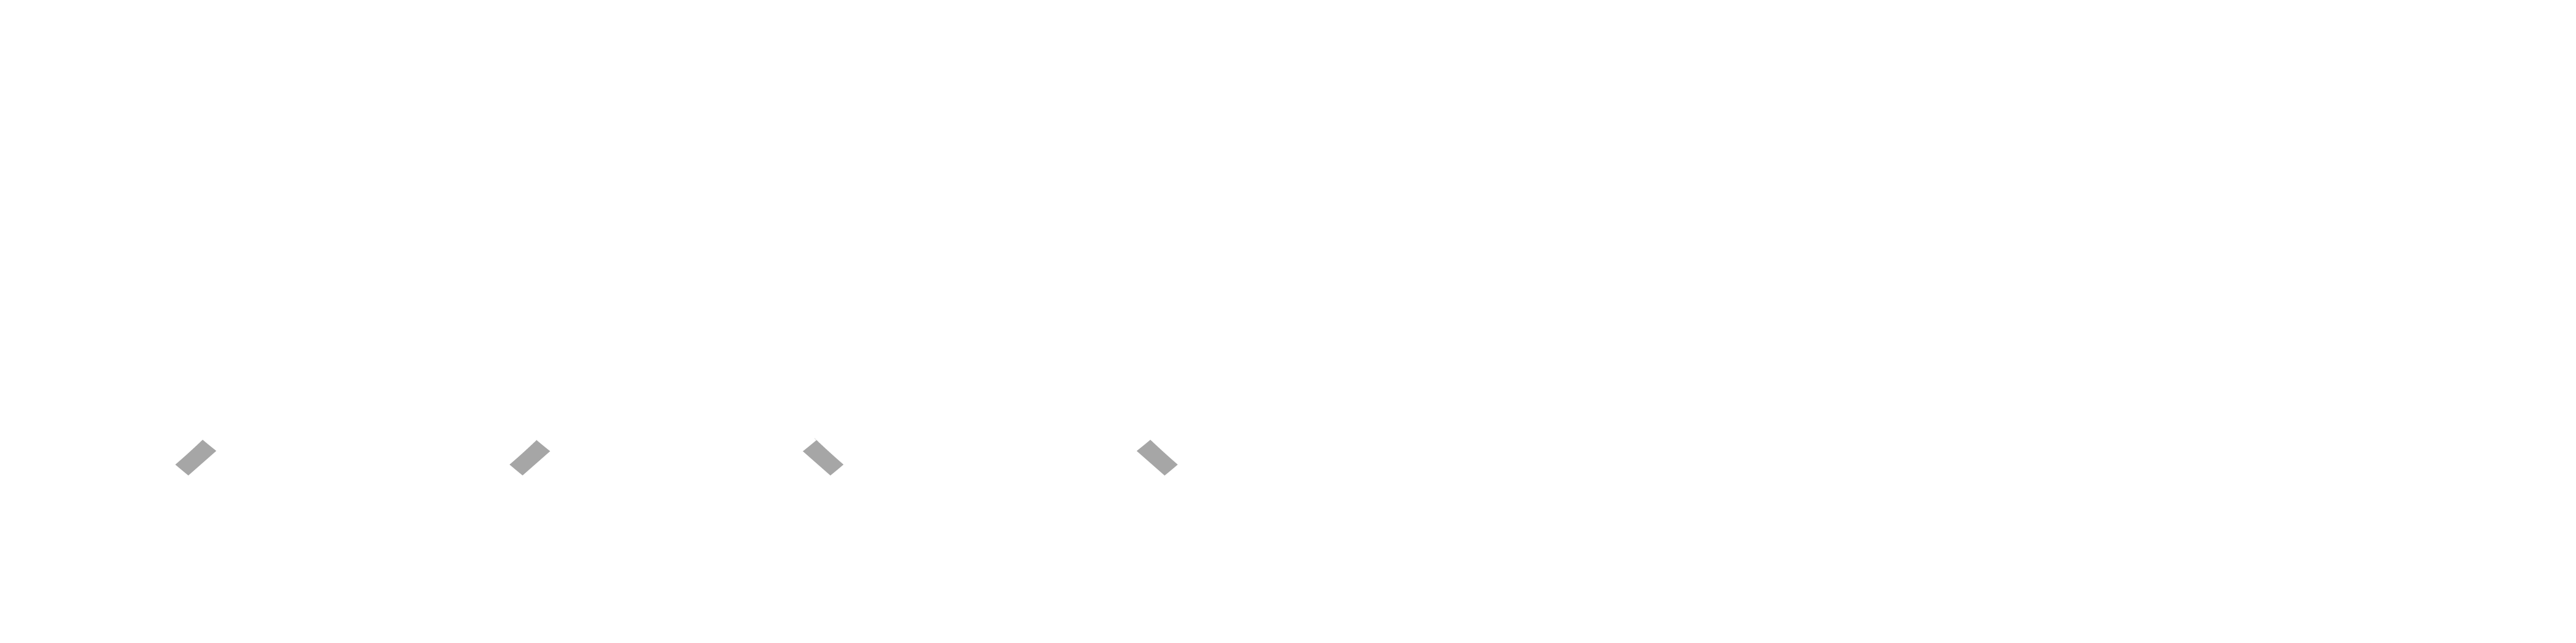 Federated Health Charities White Logo